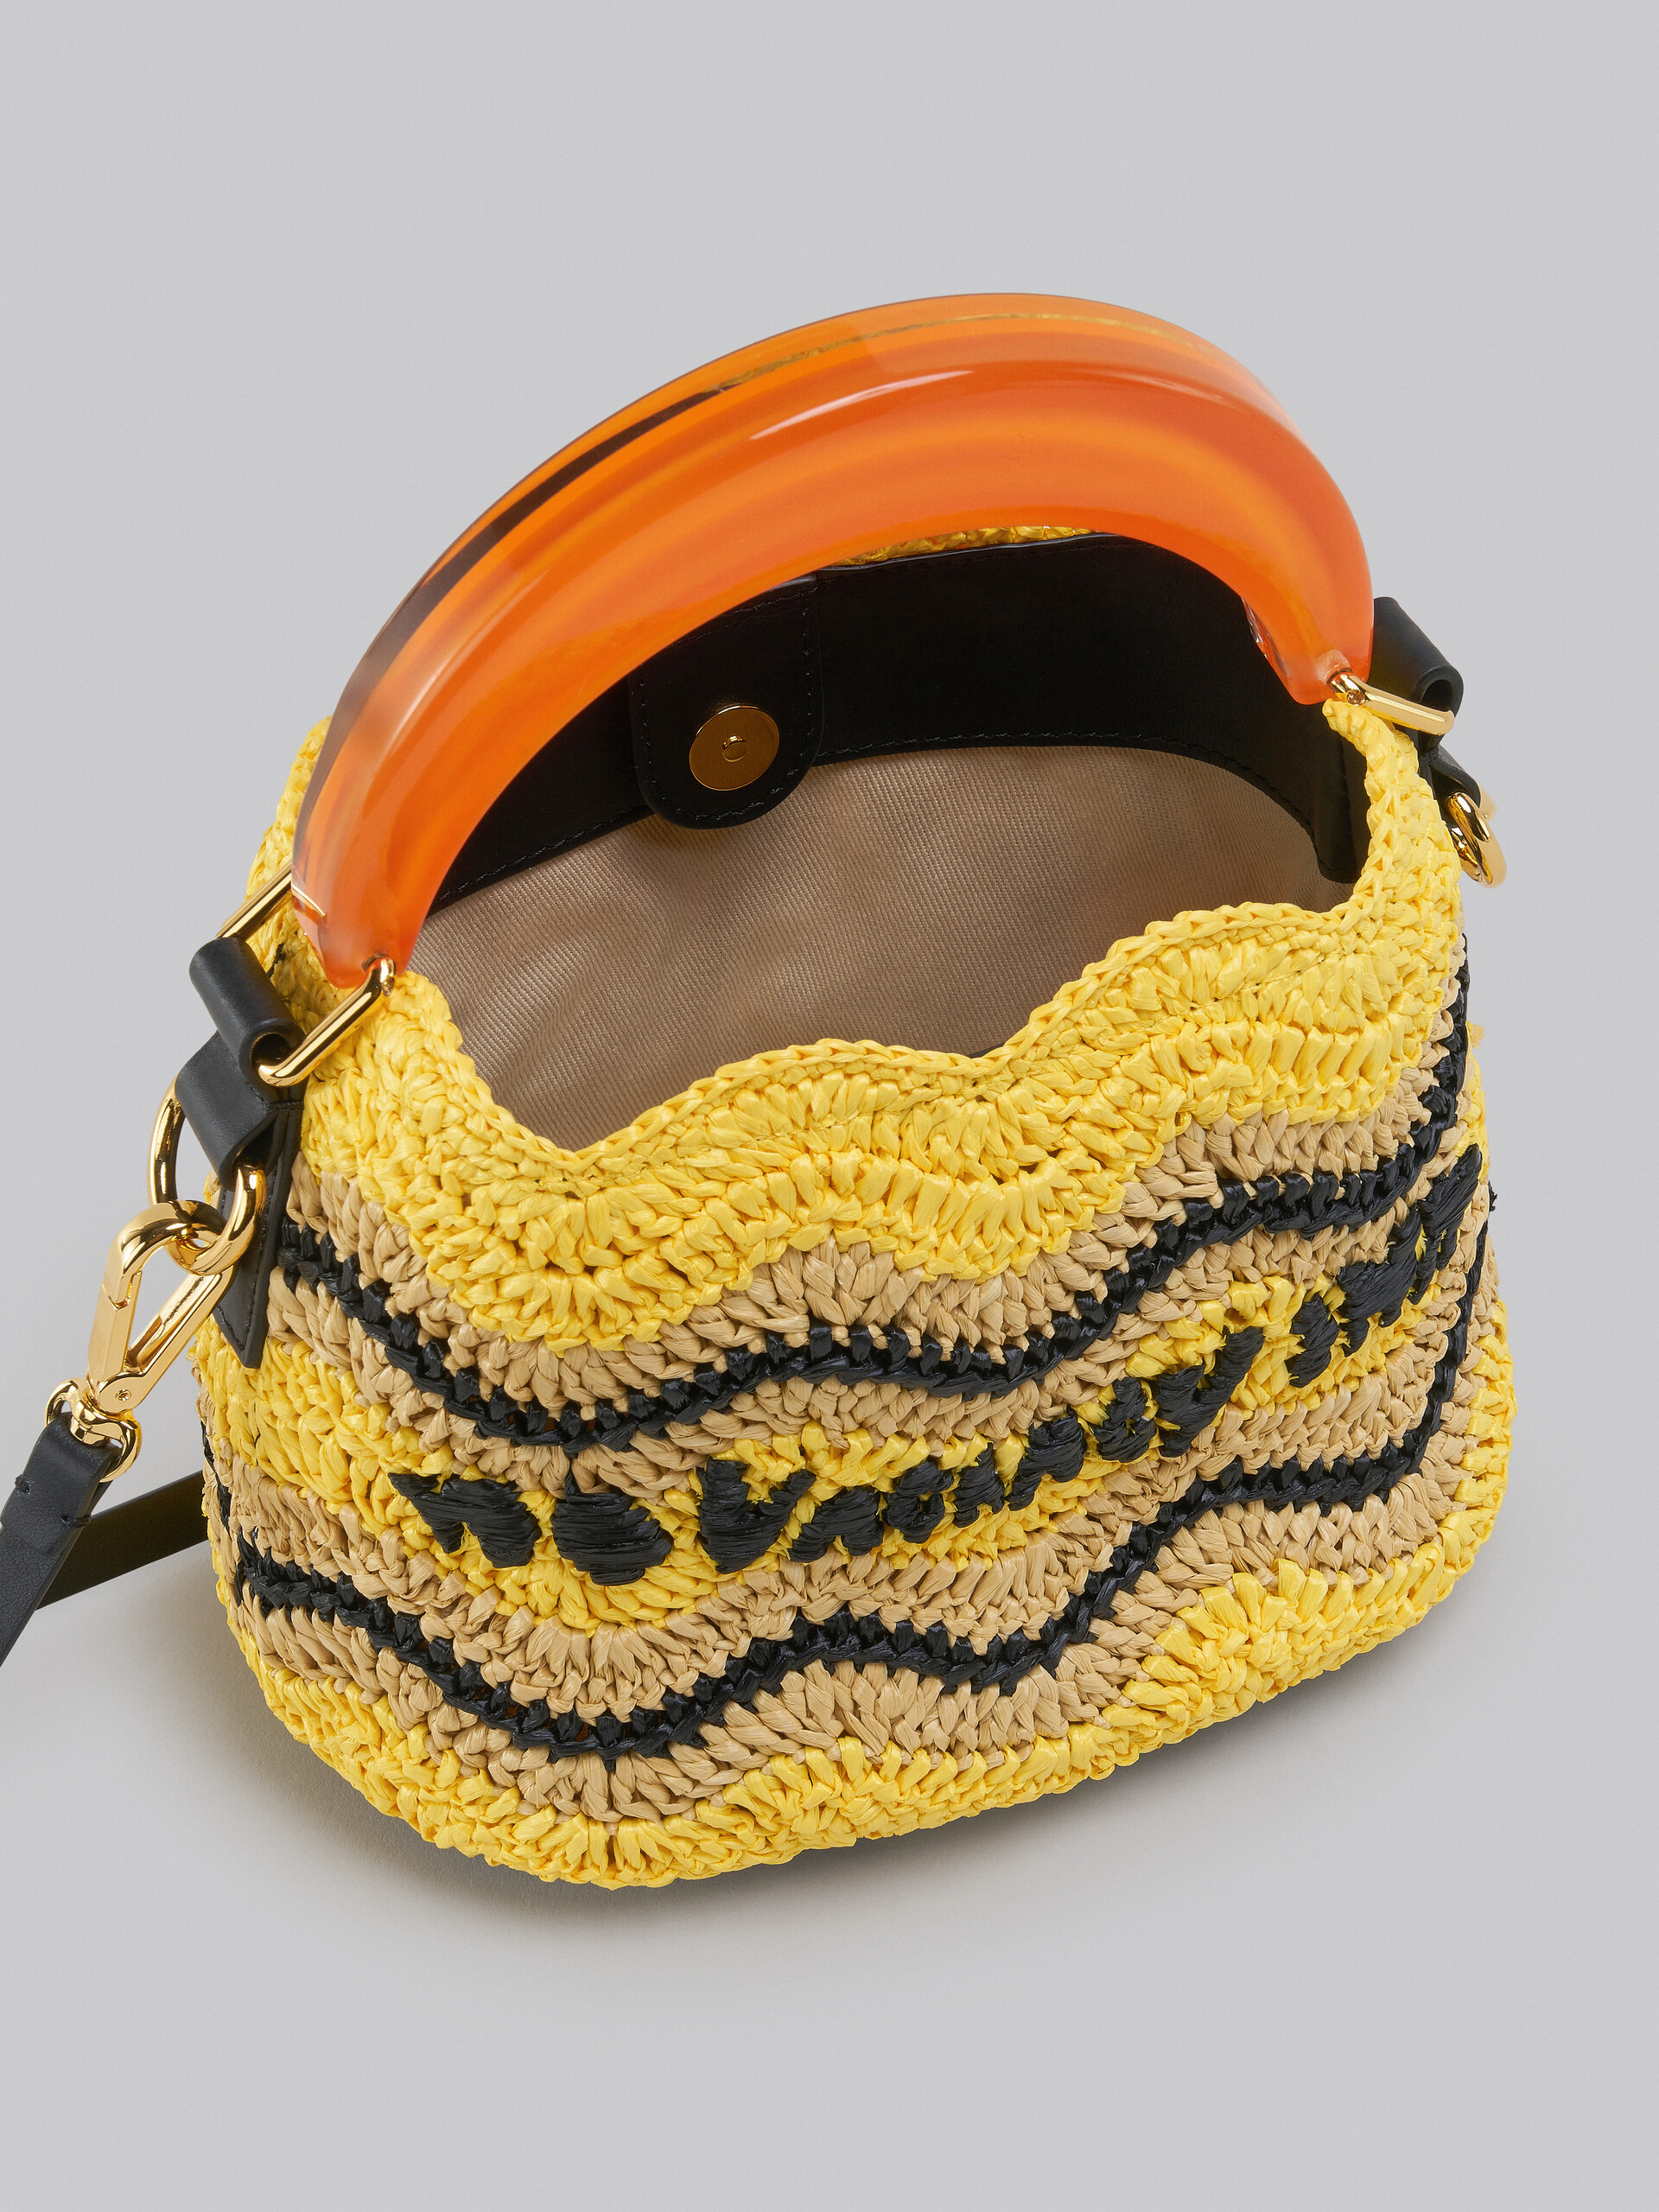 Marni x No Vacancy Inn - Venice Mini Bucket in yellow crochet raffia - Shoulder Bag - Image 4